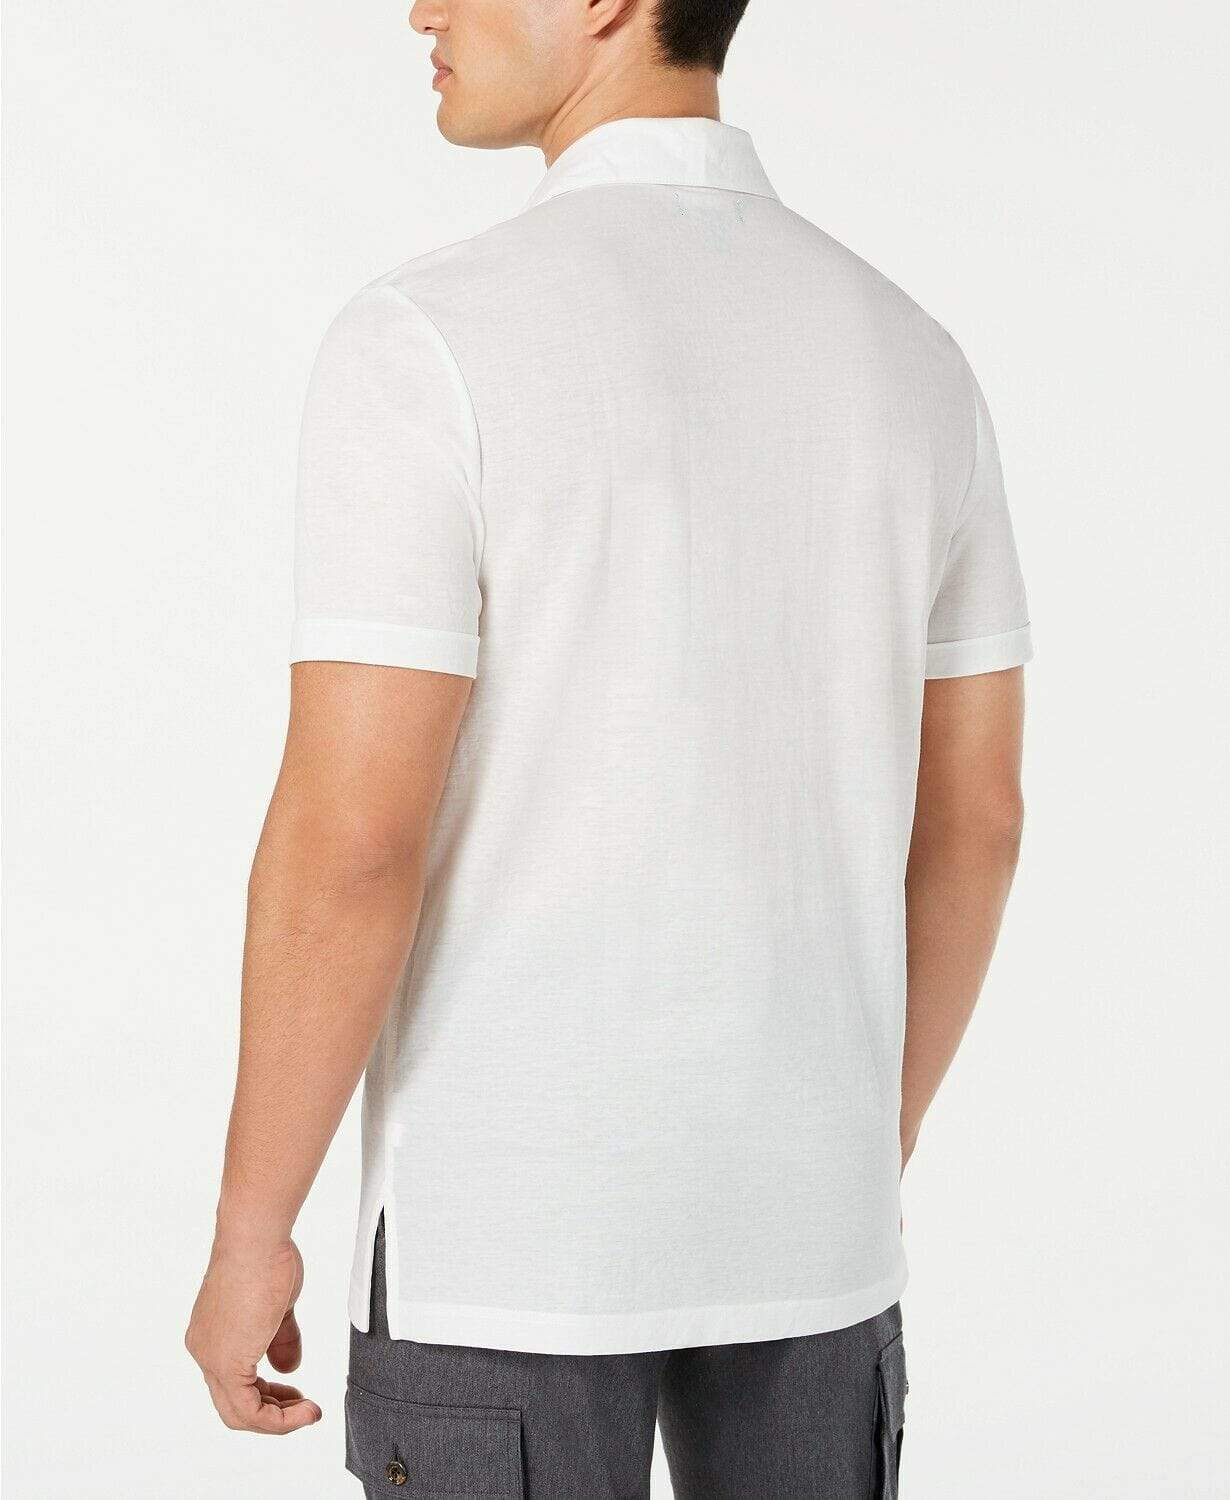 Tasso Elba Mens Tops X-Large / White Short Sleeve Shirt Linen Button Down